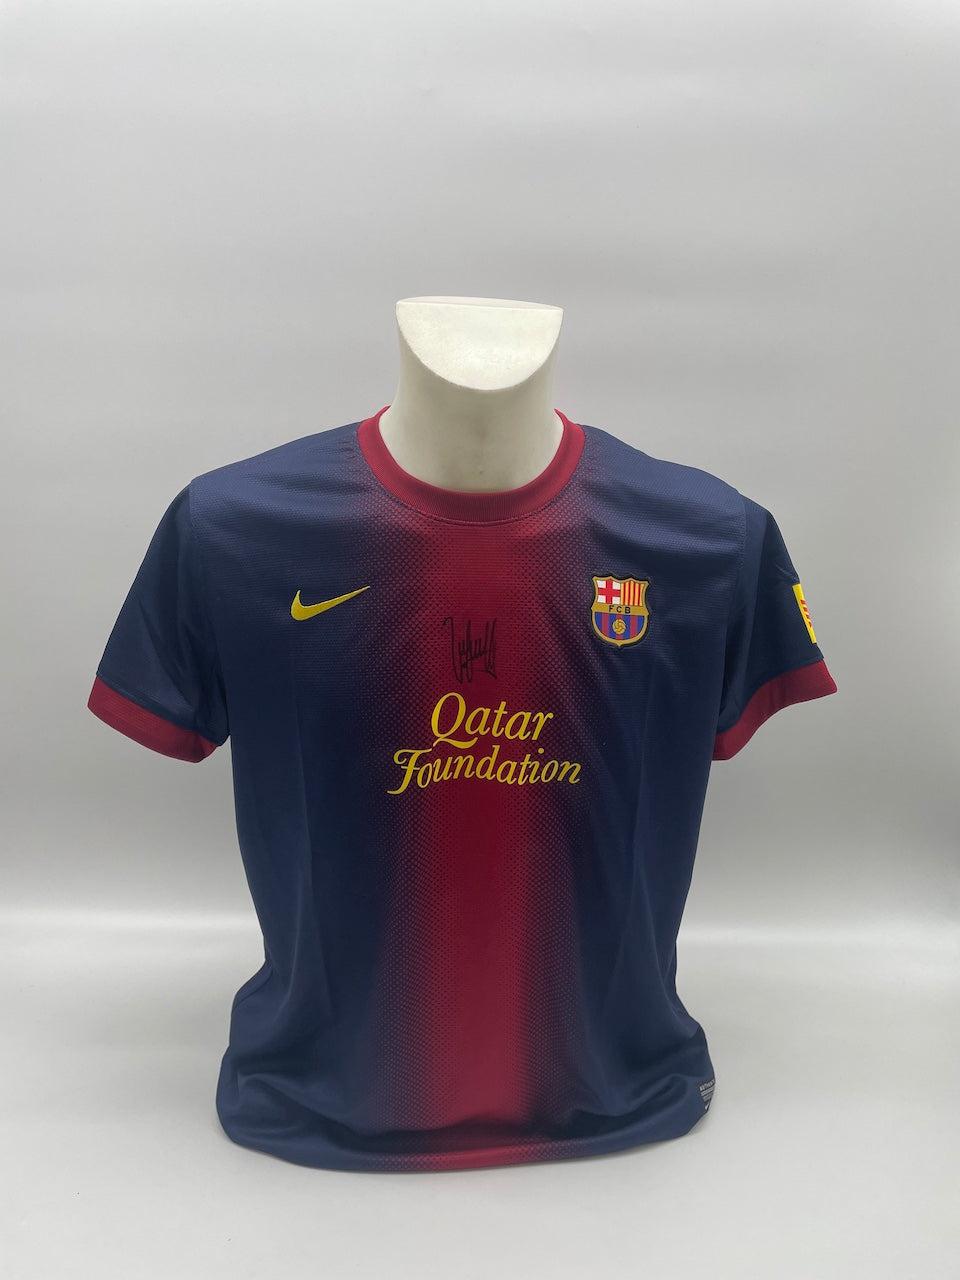 FC Barcelona Trikot Johan Cruyff signiert Autogramm Nike Niederlande Holland 158-170